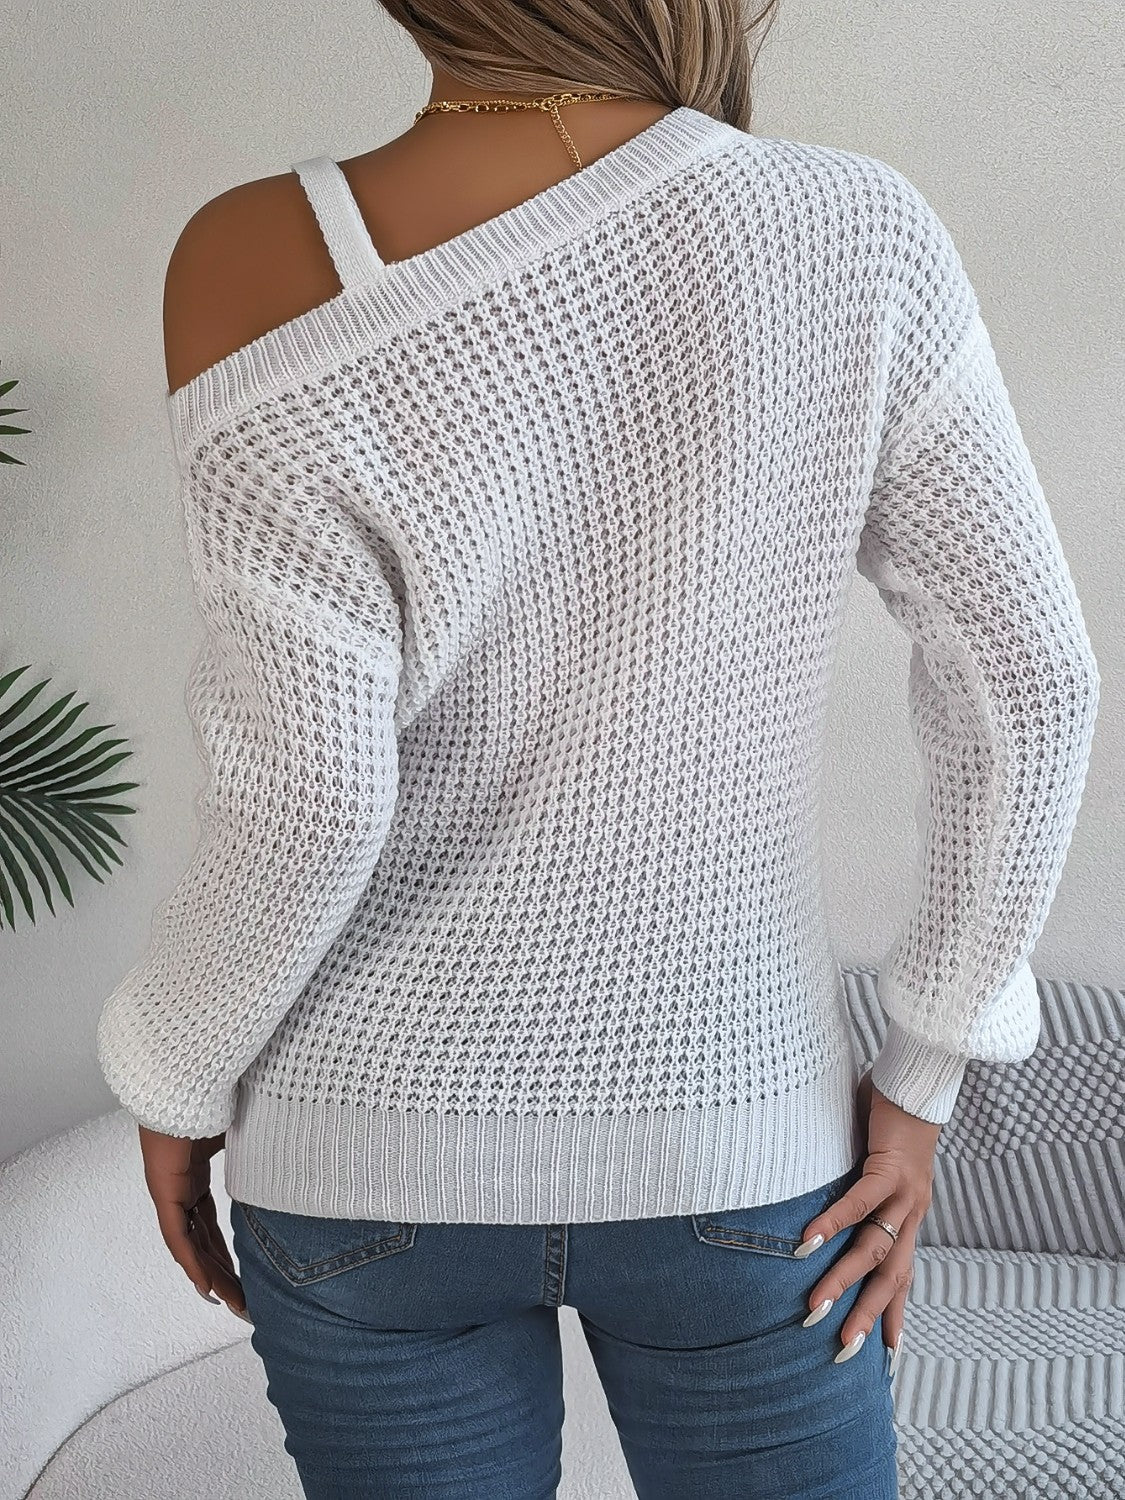 Asymmetrical Neck Long Sleeve Sweater - OMG! Rose